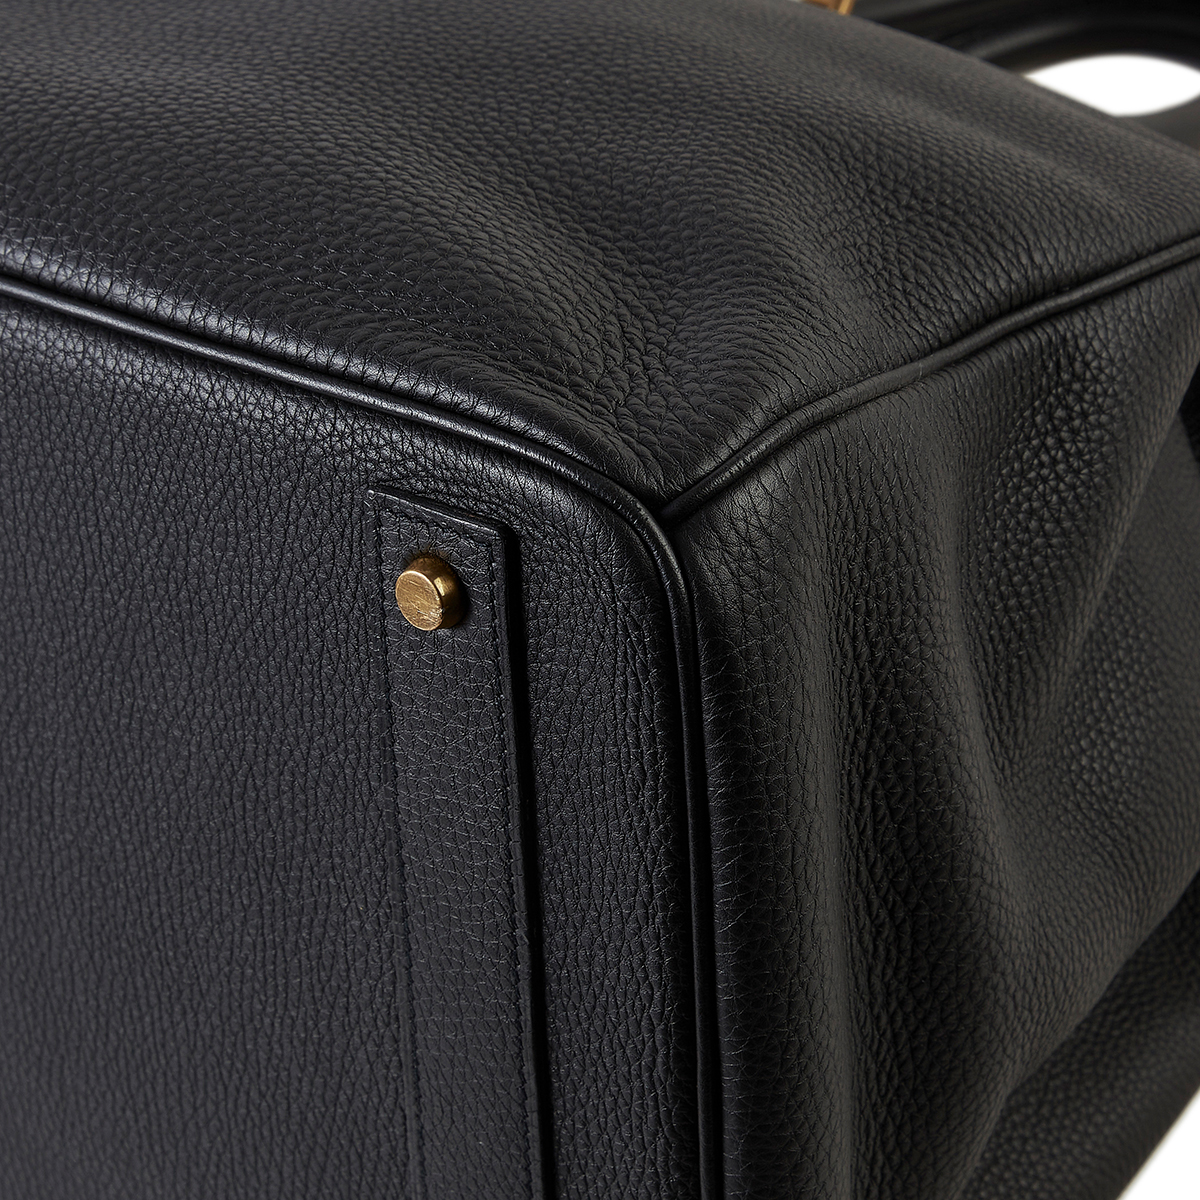 Haut à courroies cloth travel bag Hermès Grey in Cloth - 32402741